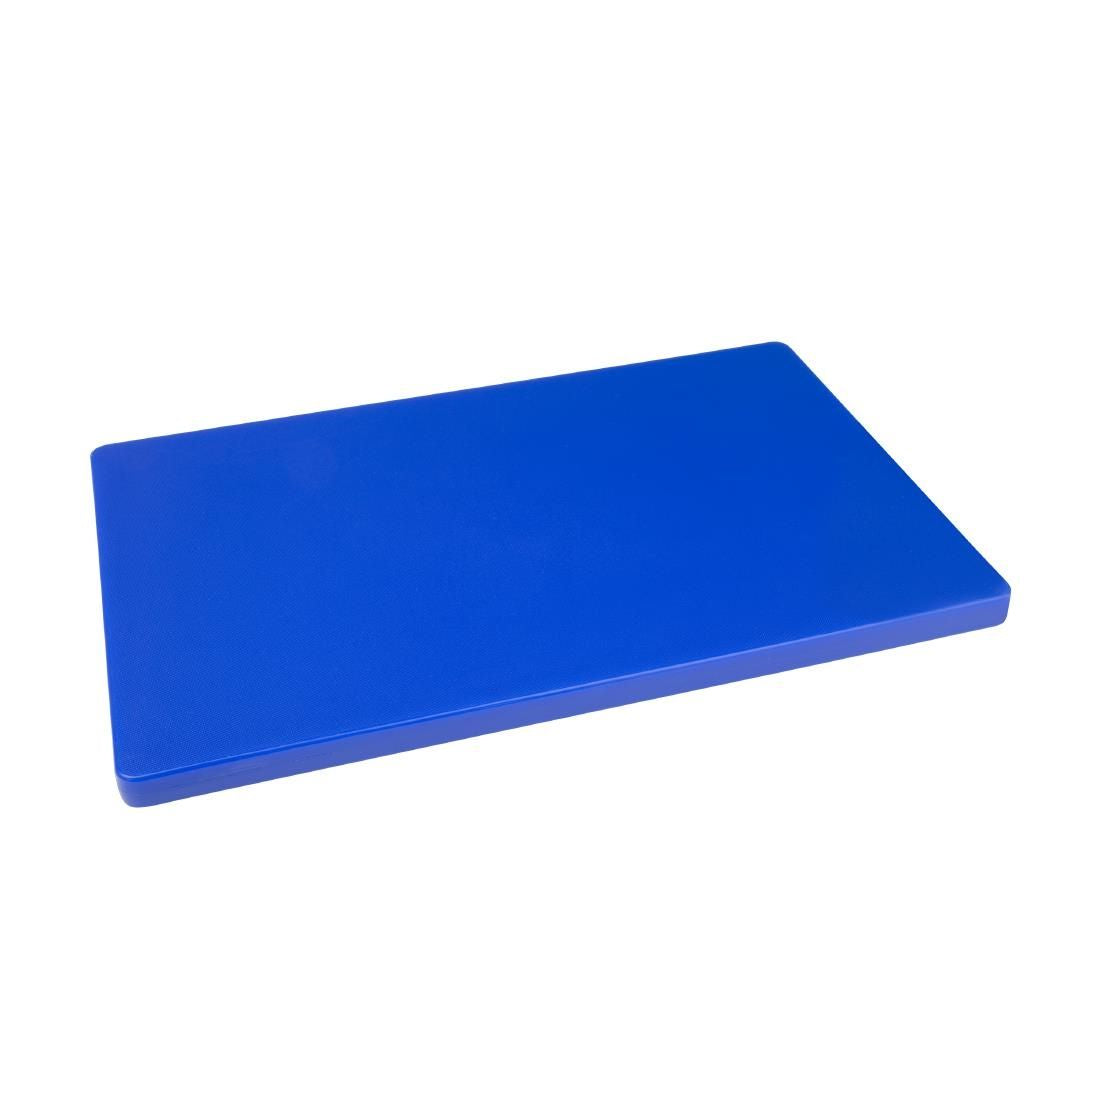 DM005 Hygiplas Extra Thick Low Density Blue Chopping Board Standard JD Catering Equipment Solutions Ltd